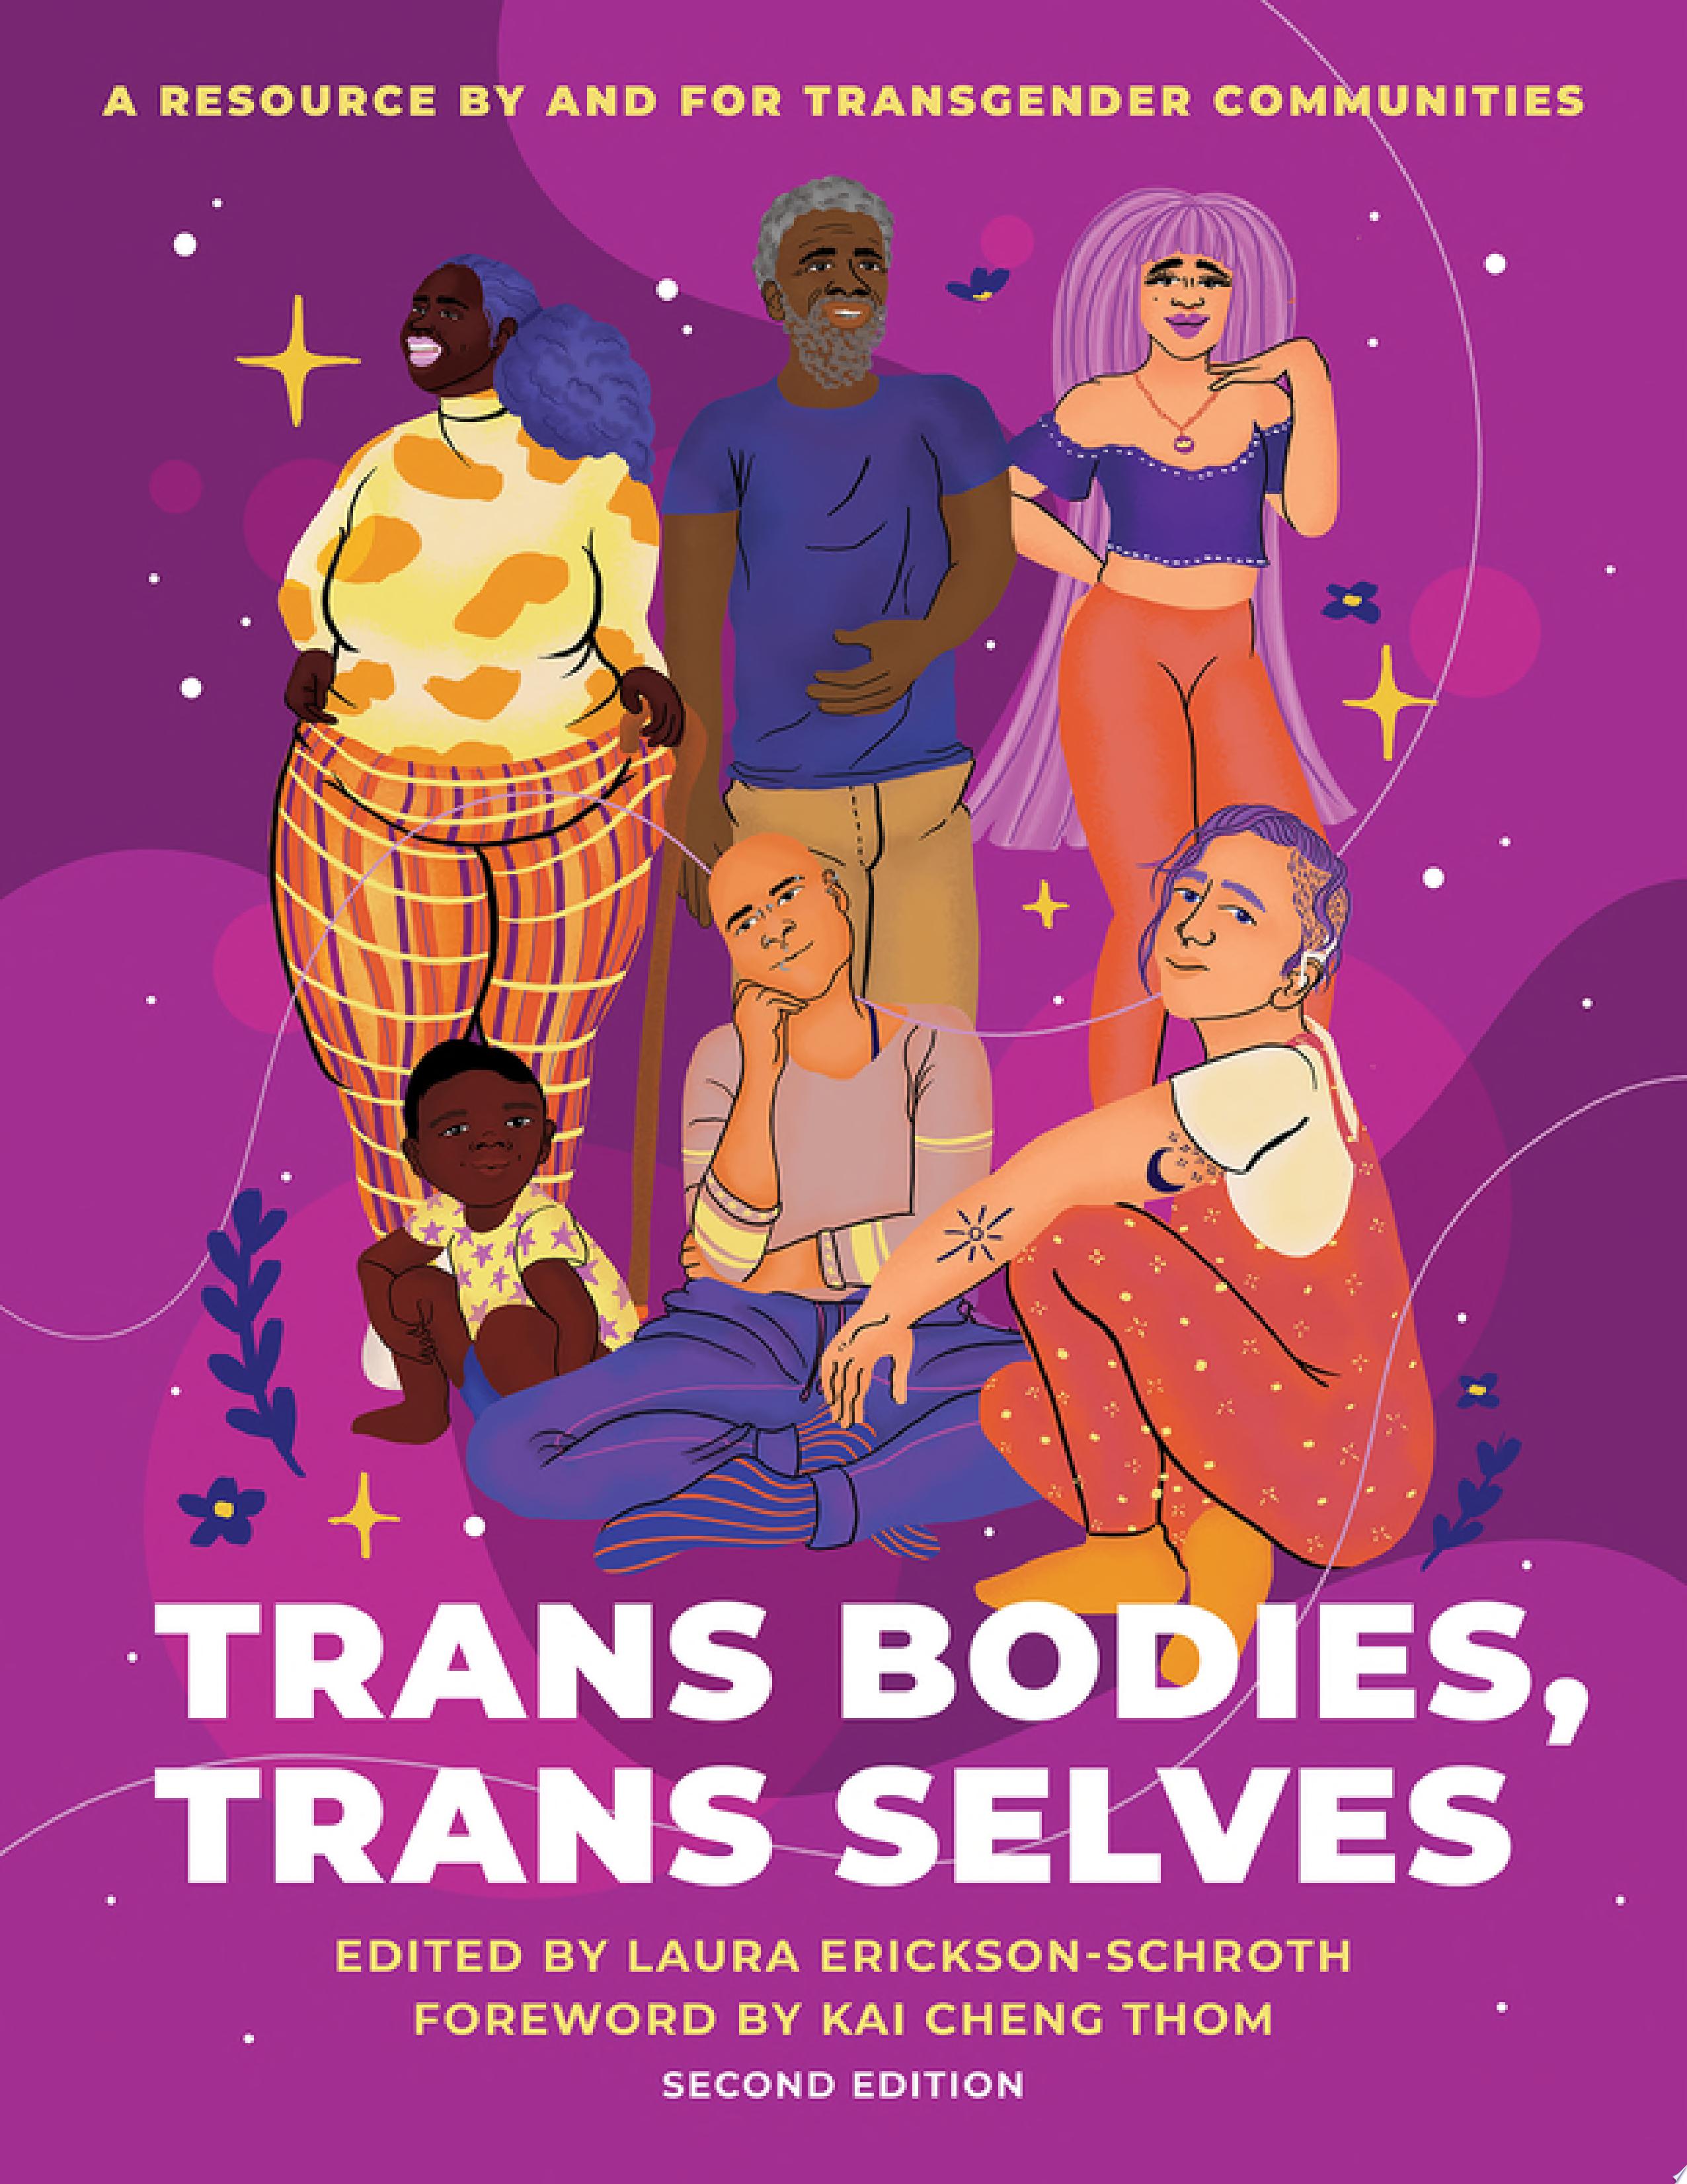 Image for "Trans Bodies, Trans Selves"